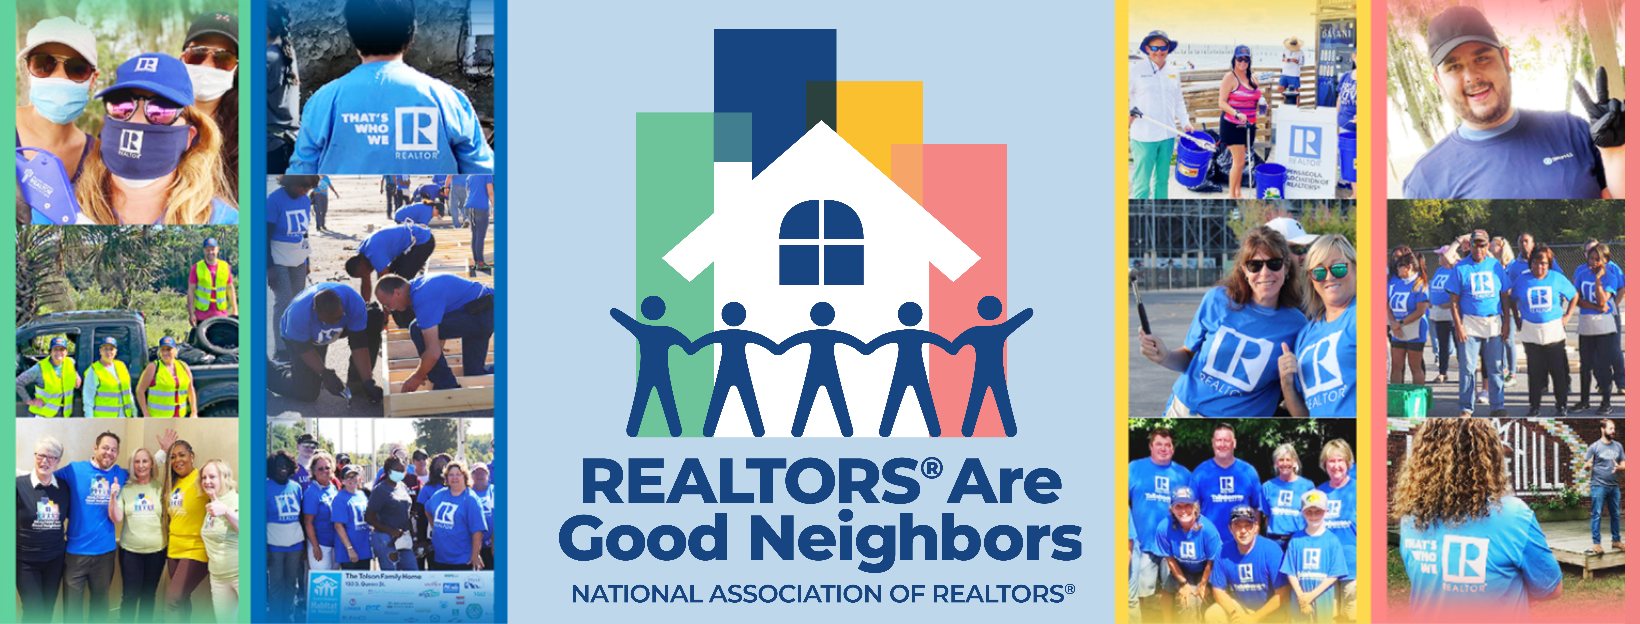 National association of realtors NAR community giveback